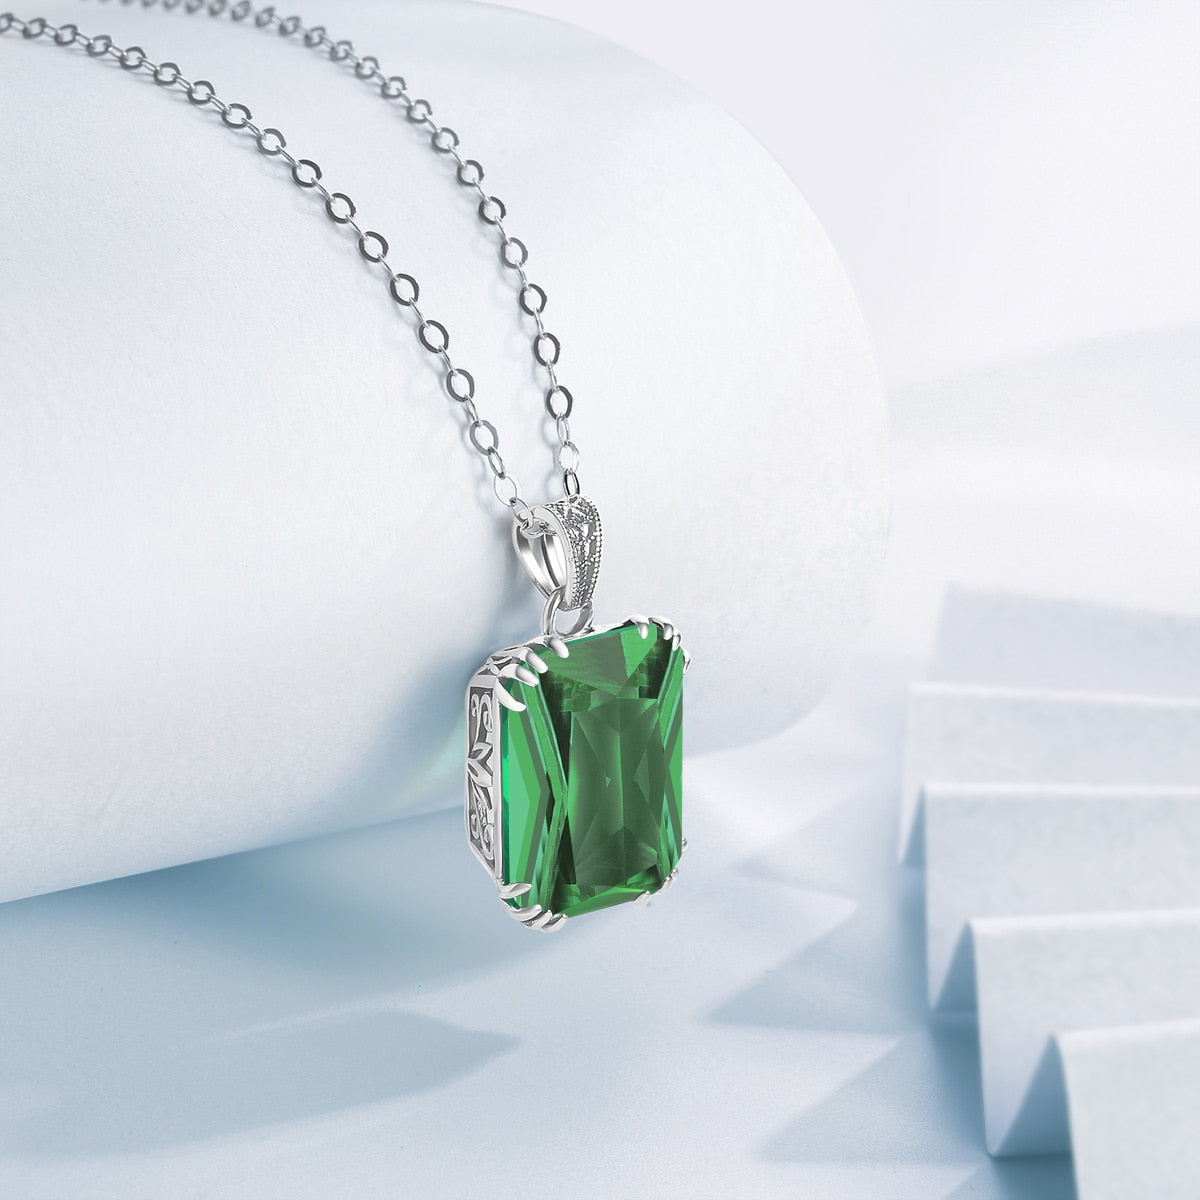 SILVERCHAKRA 925 Sterling Silver Necklace For Women Luxury Aquamarine Gemstones Necklace Pendant Fine Jewelry Filigree Design Emerald 45cm